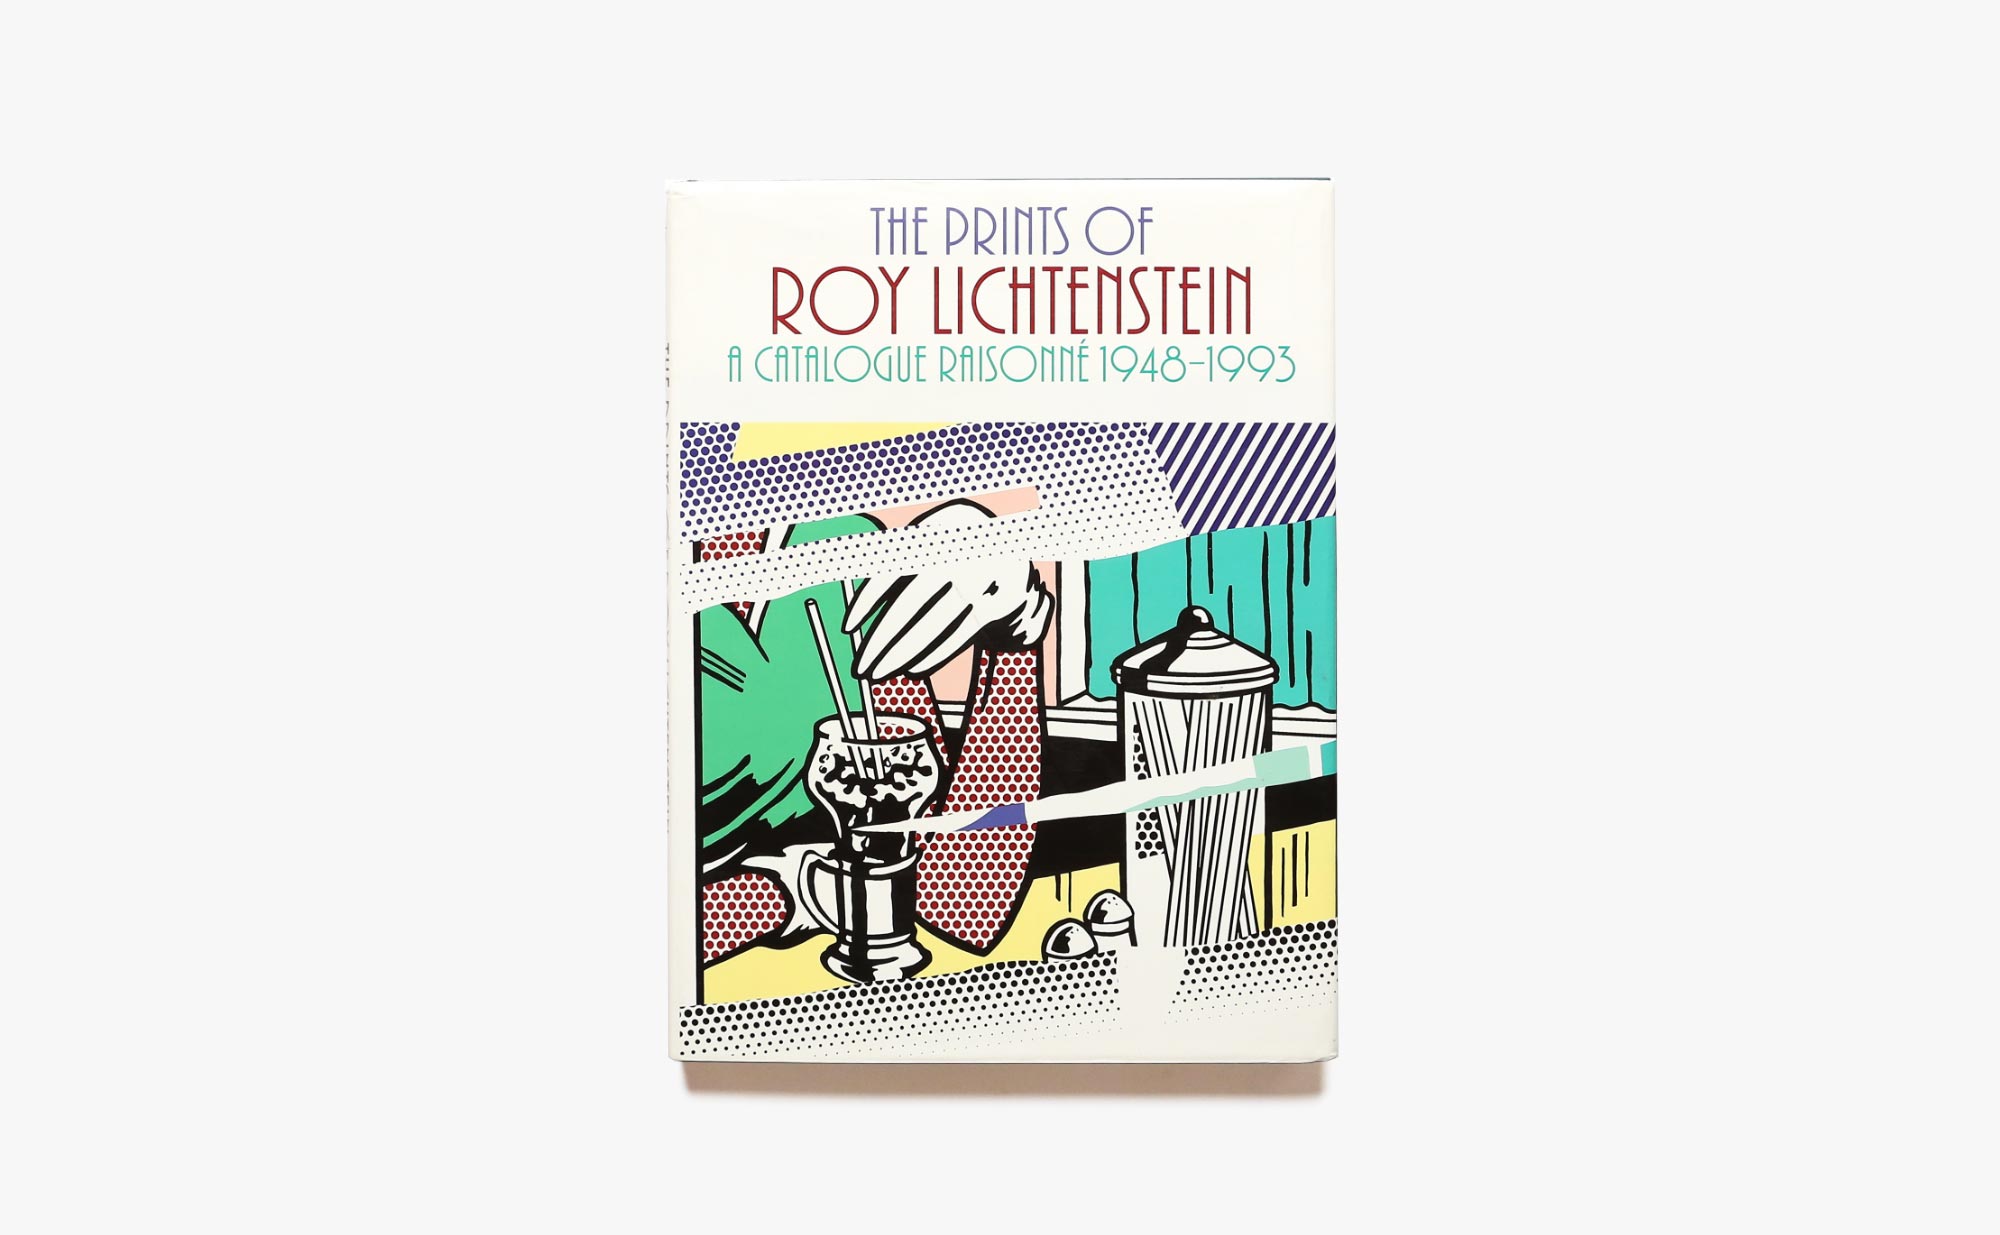 The Prints of Roy Lichtenstein: A Catalogue Raisonne 1948-1993